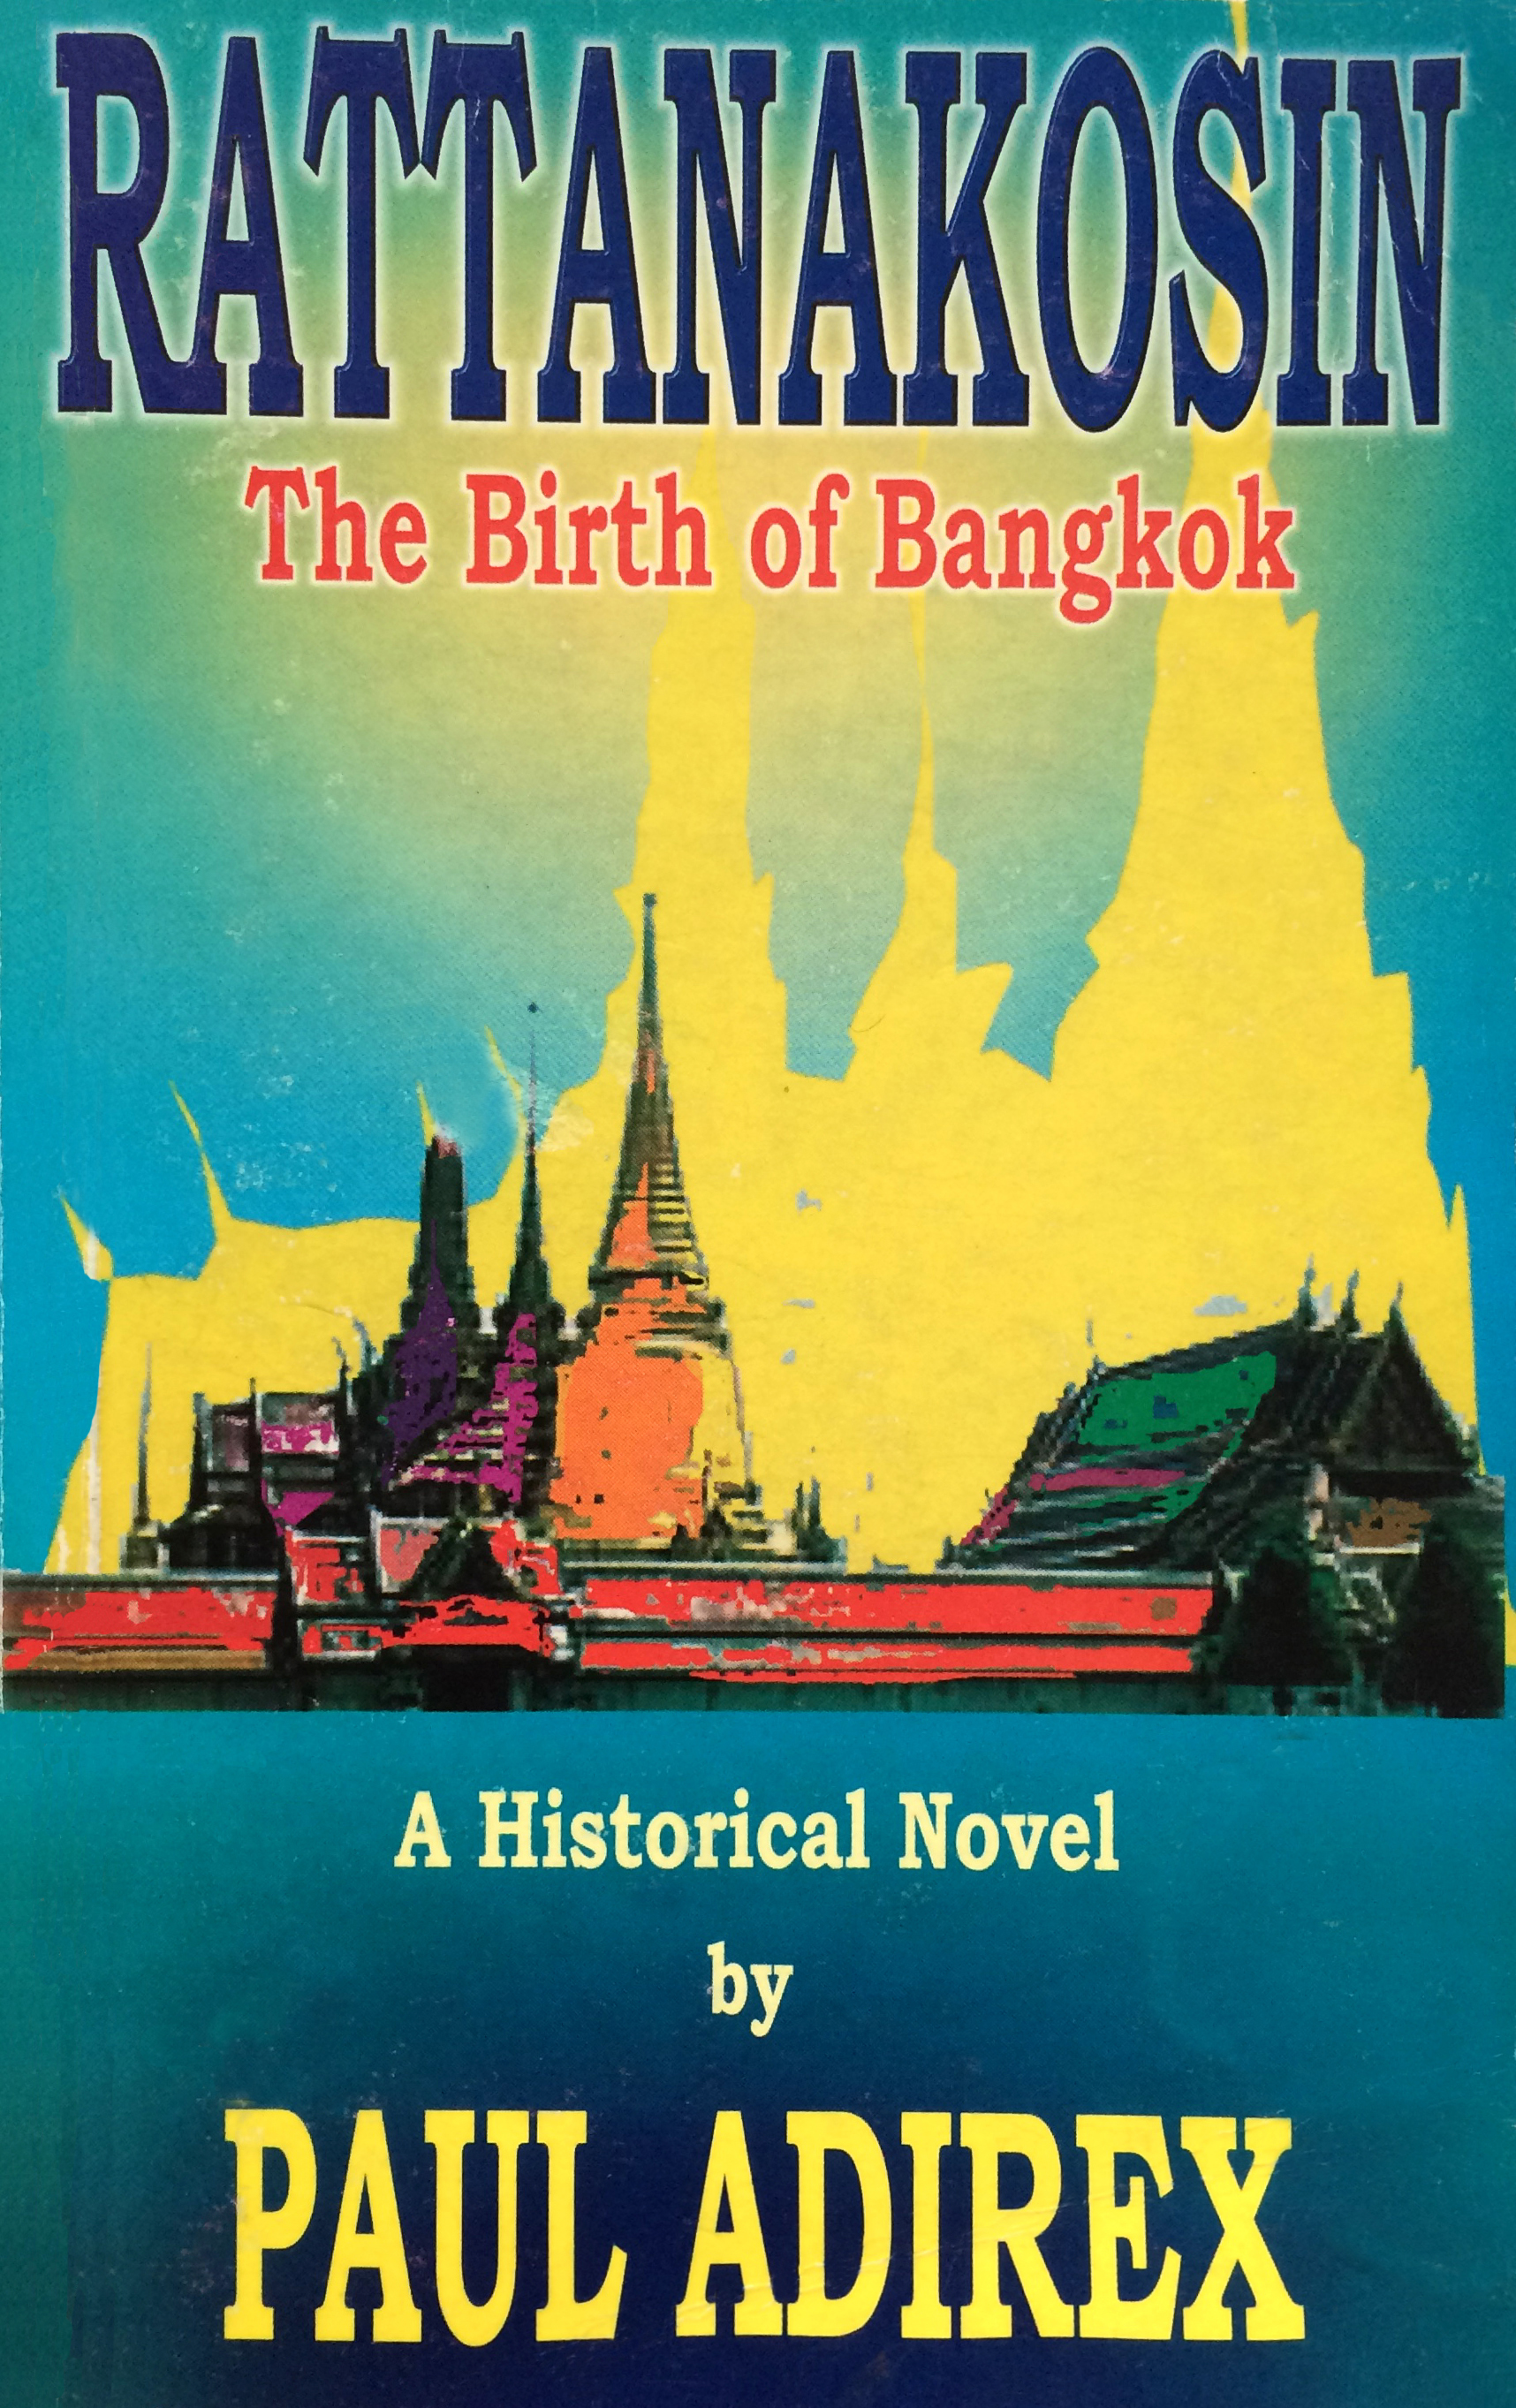 Rattanakosin:  The Birth of Bangkok